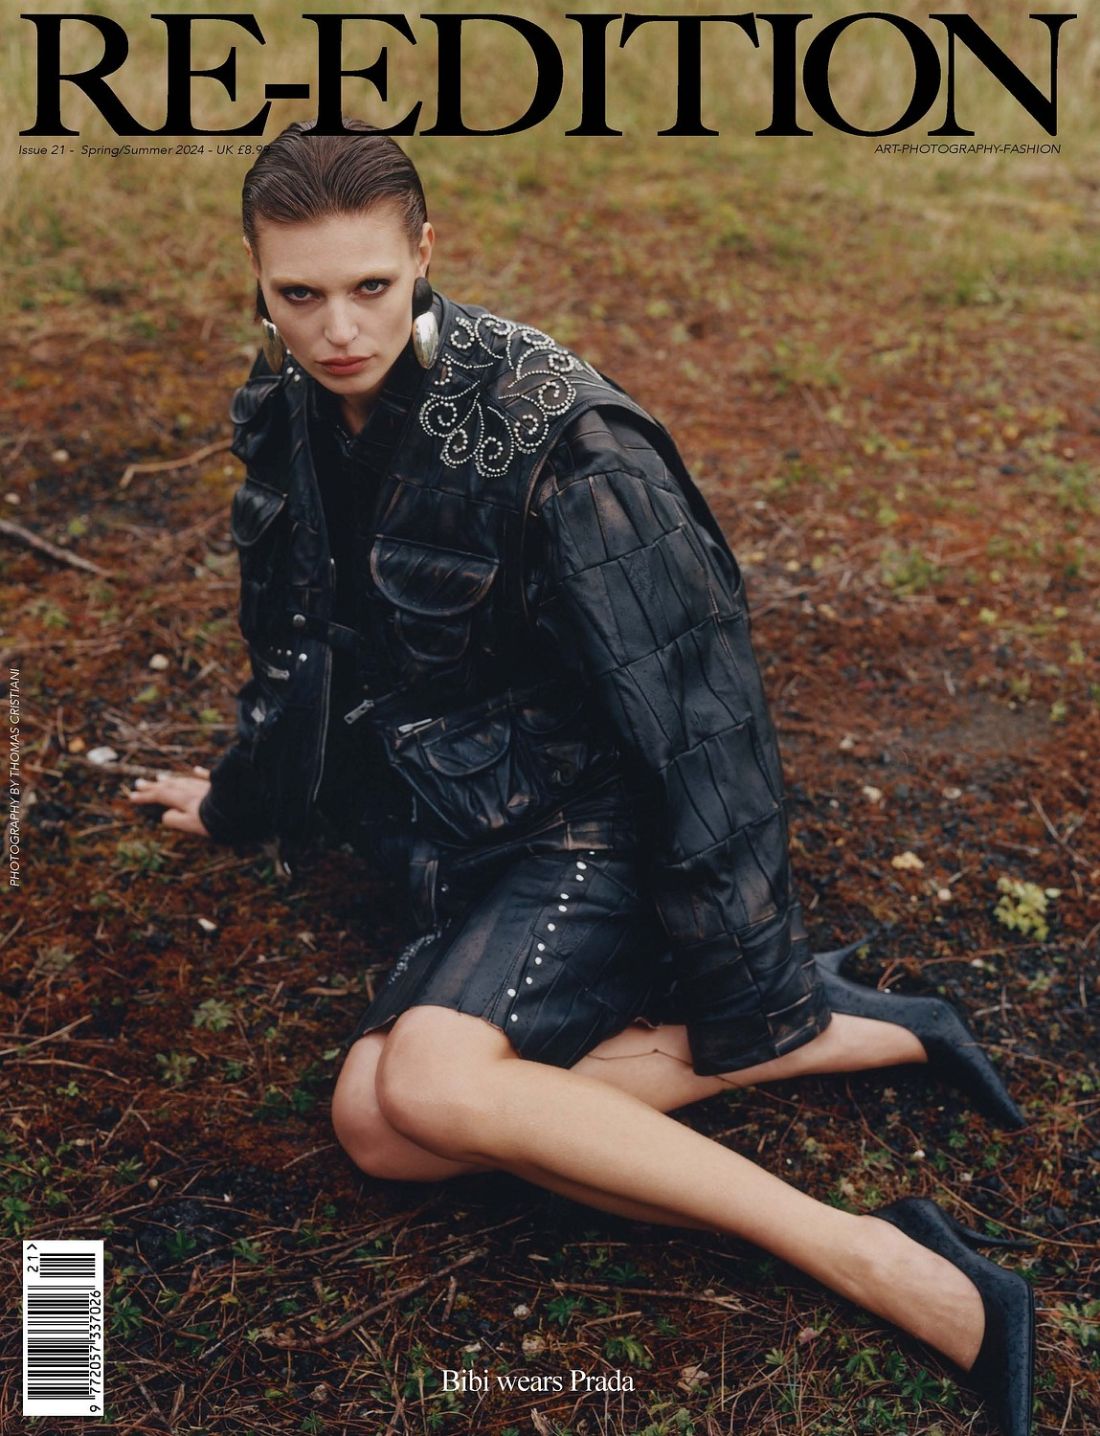 Bibi Breslin Covers Re-Edition Magazine Spring-Summer 2024 wearing Prada Black Leather 